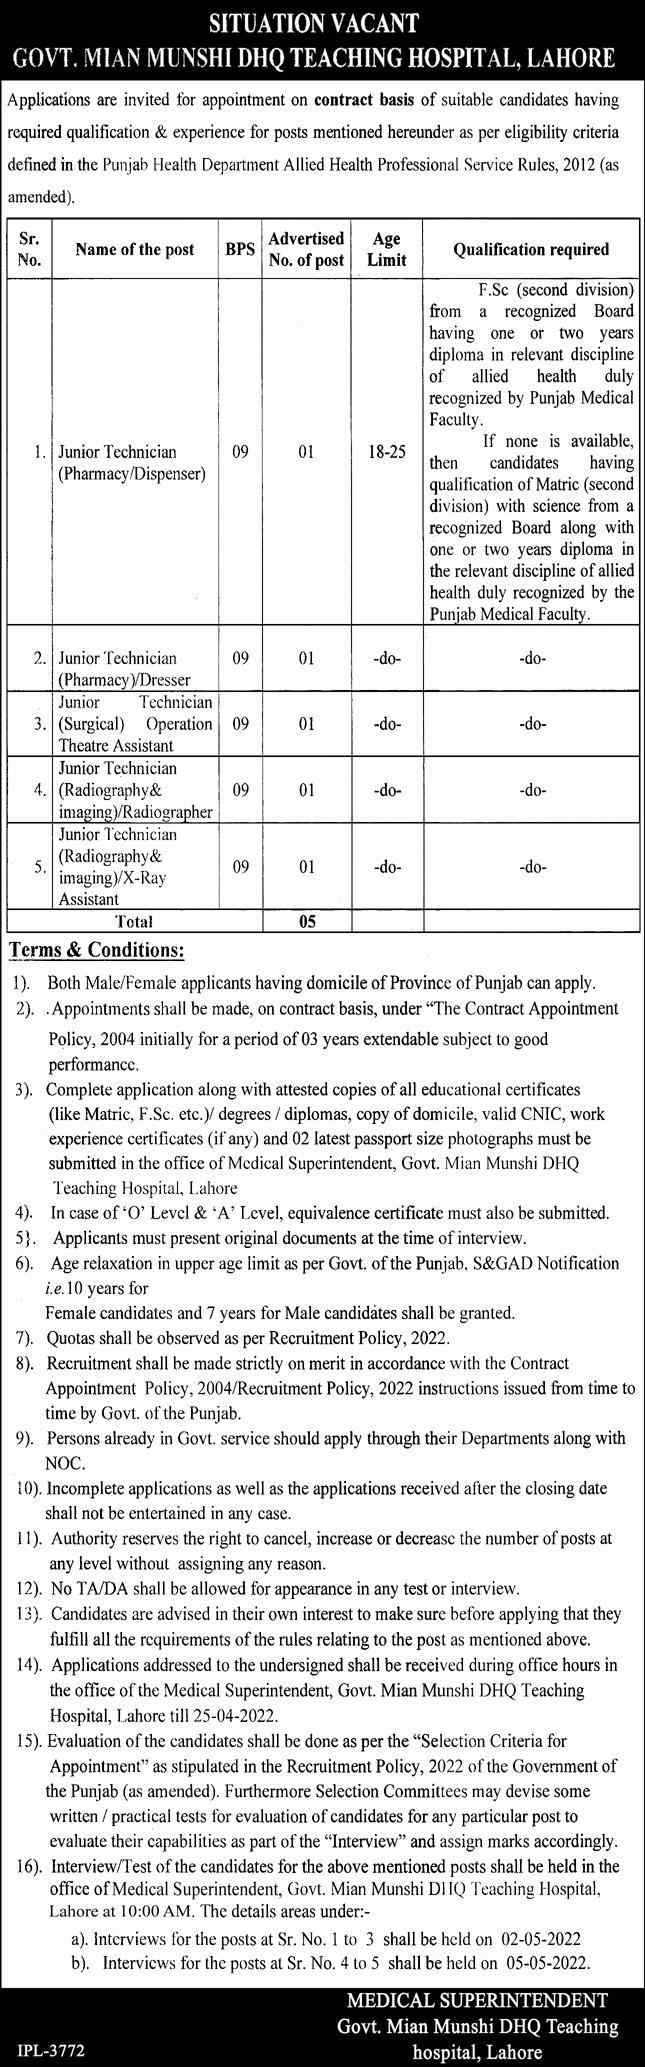 Govt. Munshi DHQ Teaching Hospital Lahore Jobs 2022